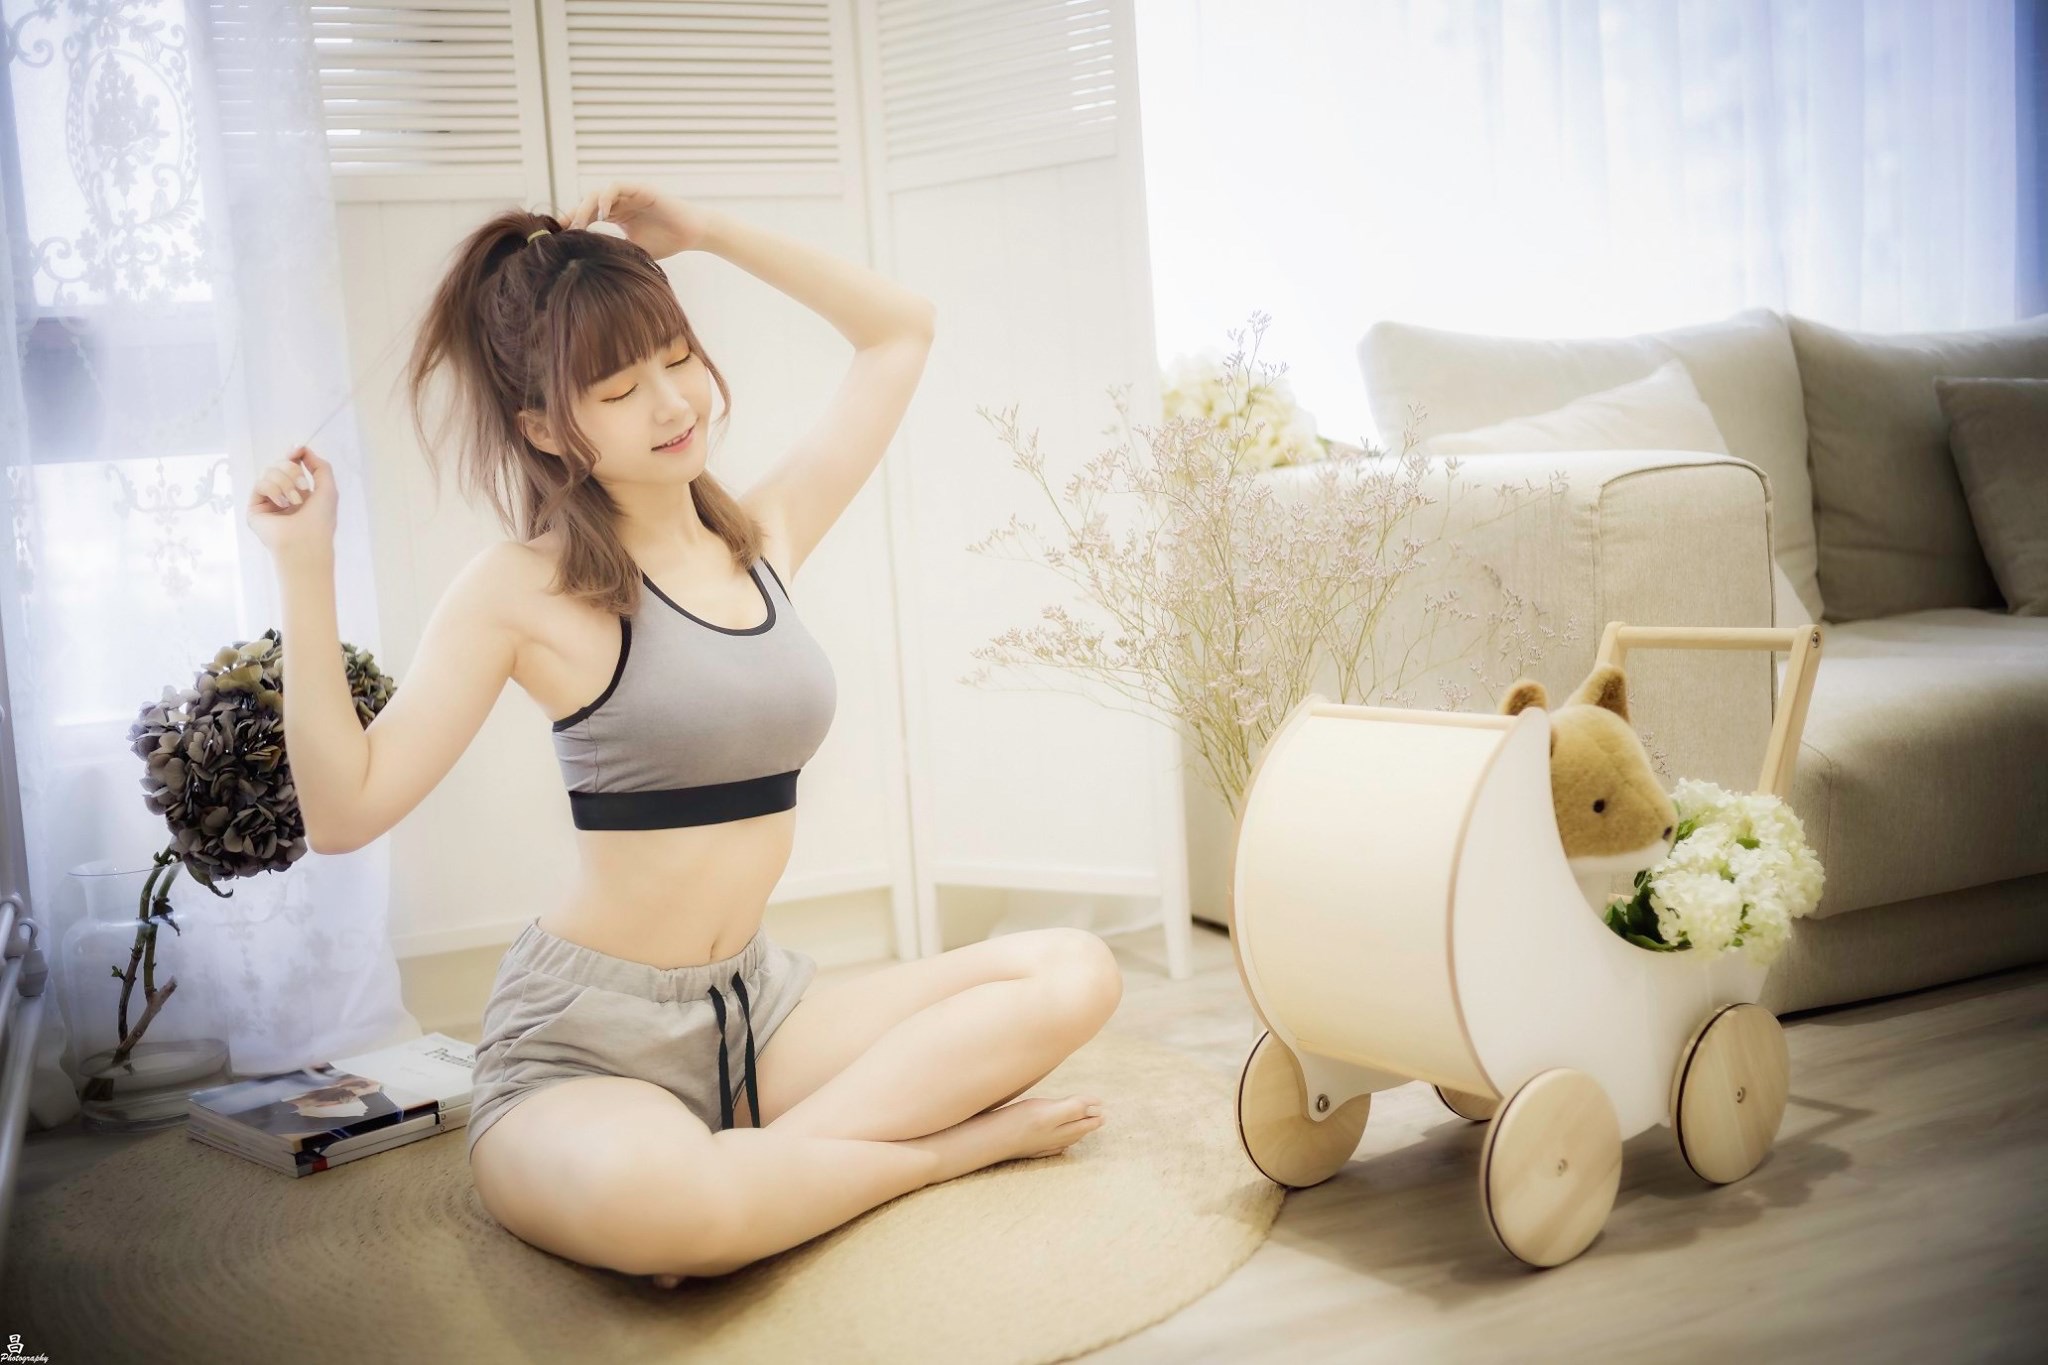 Asian Model Women Long Hair Brunette Sitting Couch Sport Bras Shorts Barefoot Teddy Bears Stroller P 2048x1365